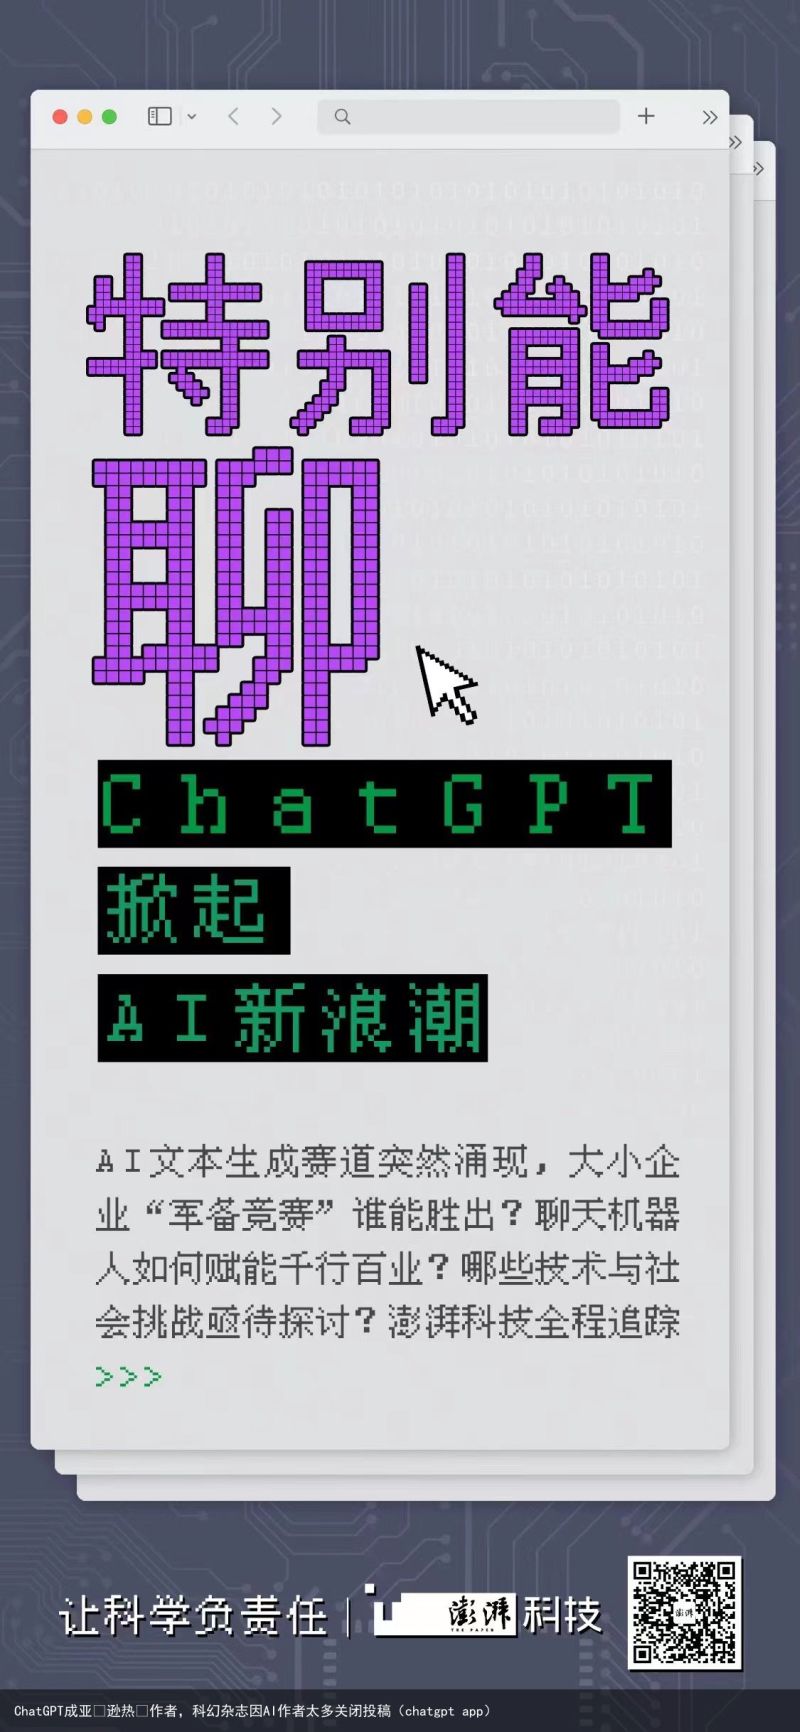 ChatGPT成亚⻢逊热⻔作者，科幻杂志因AI作者太多关闭投稿（chatgpt app）